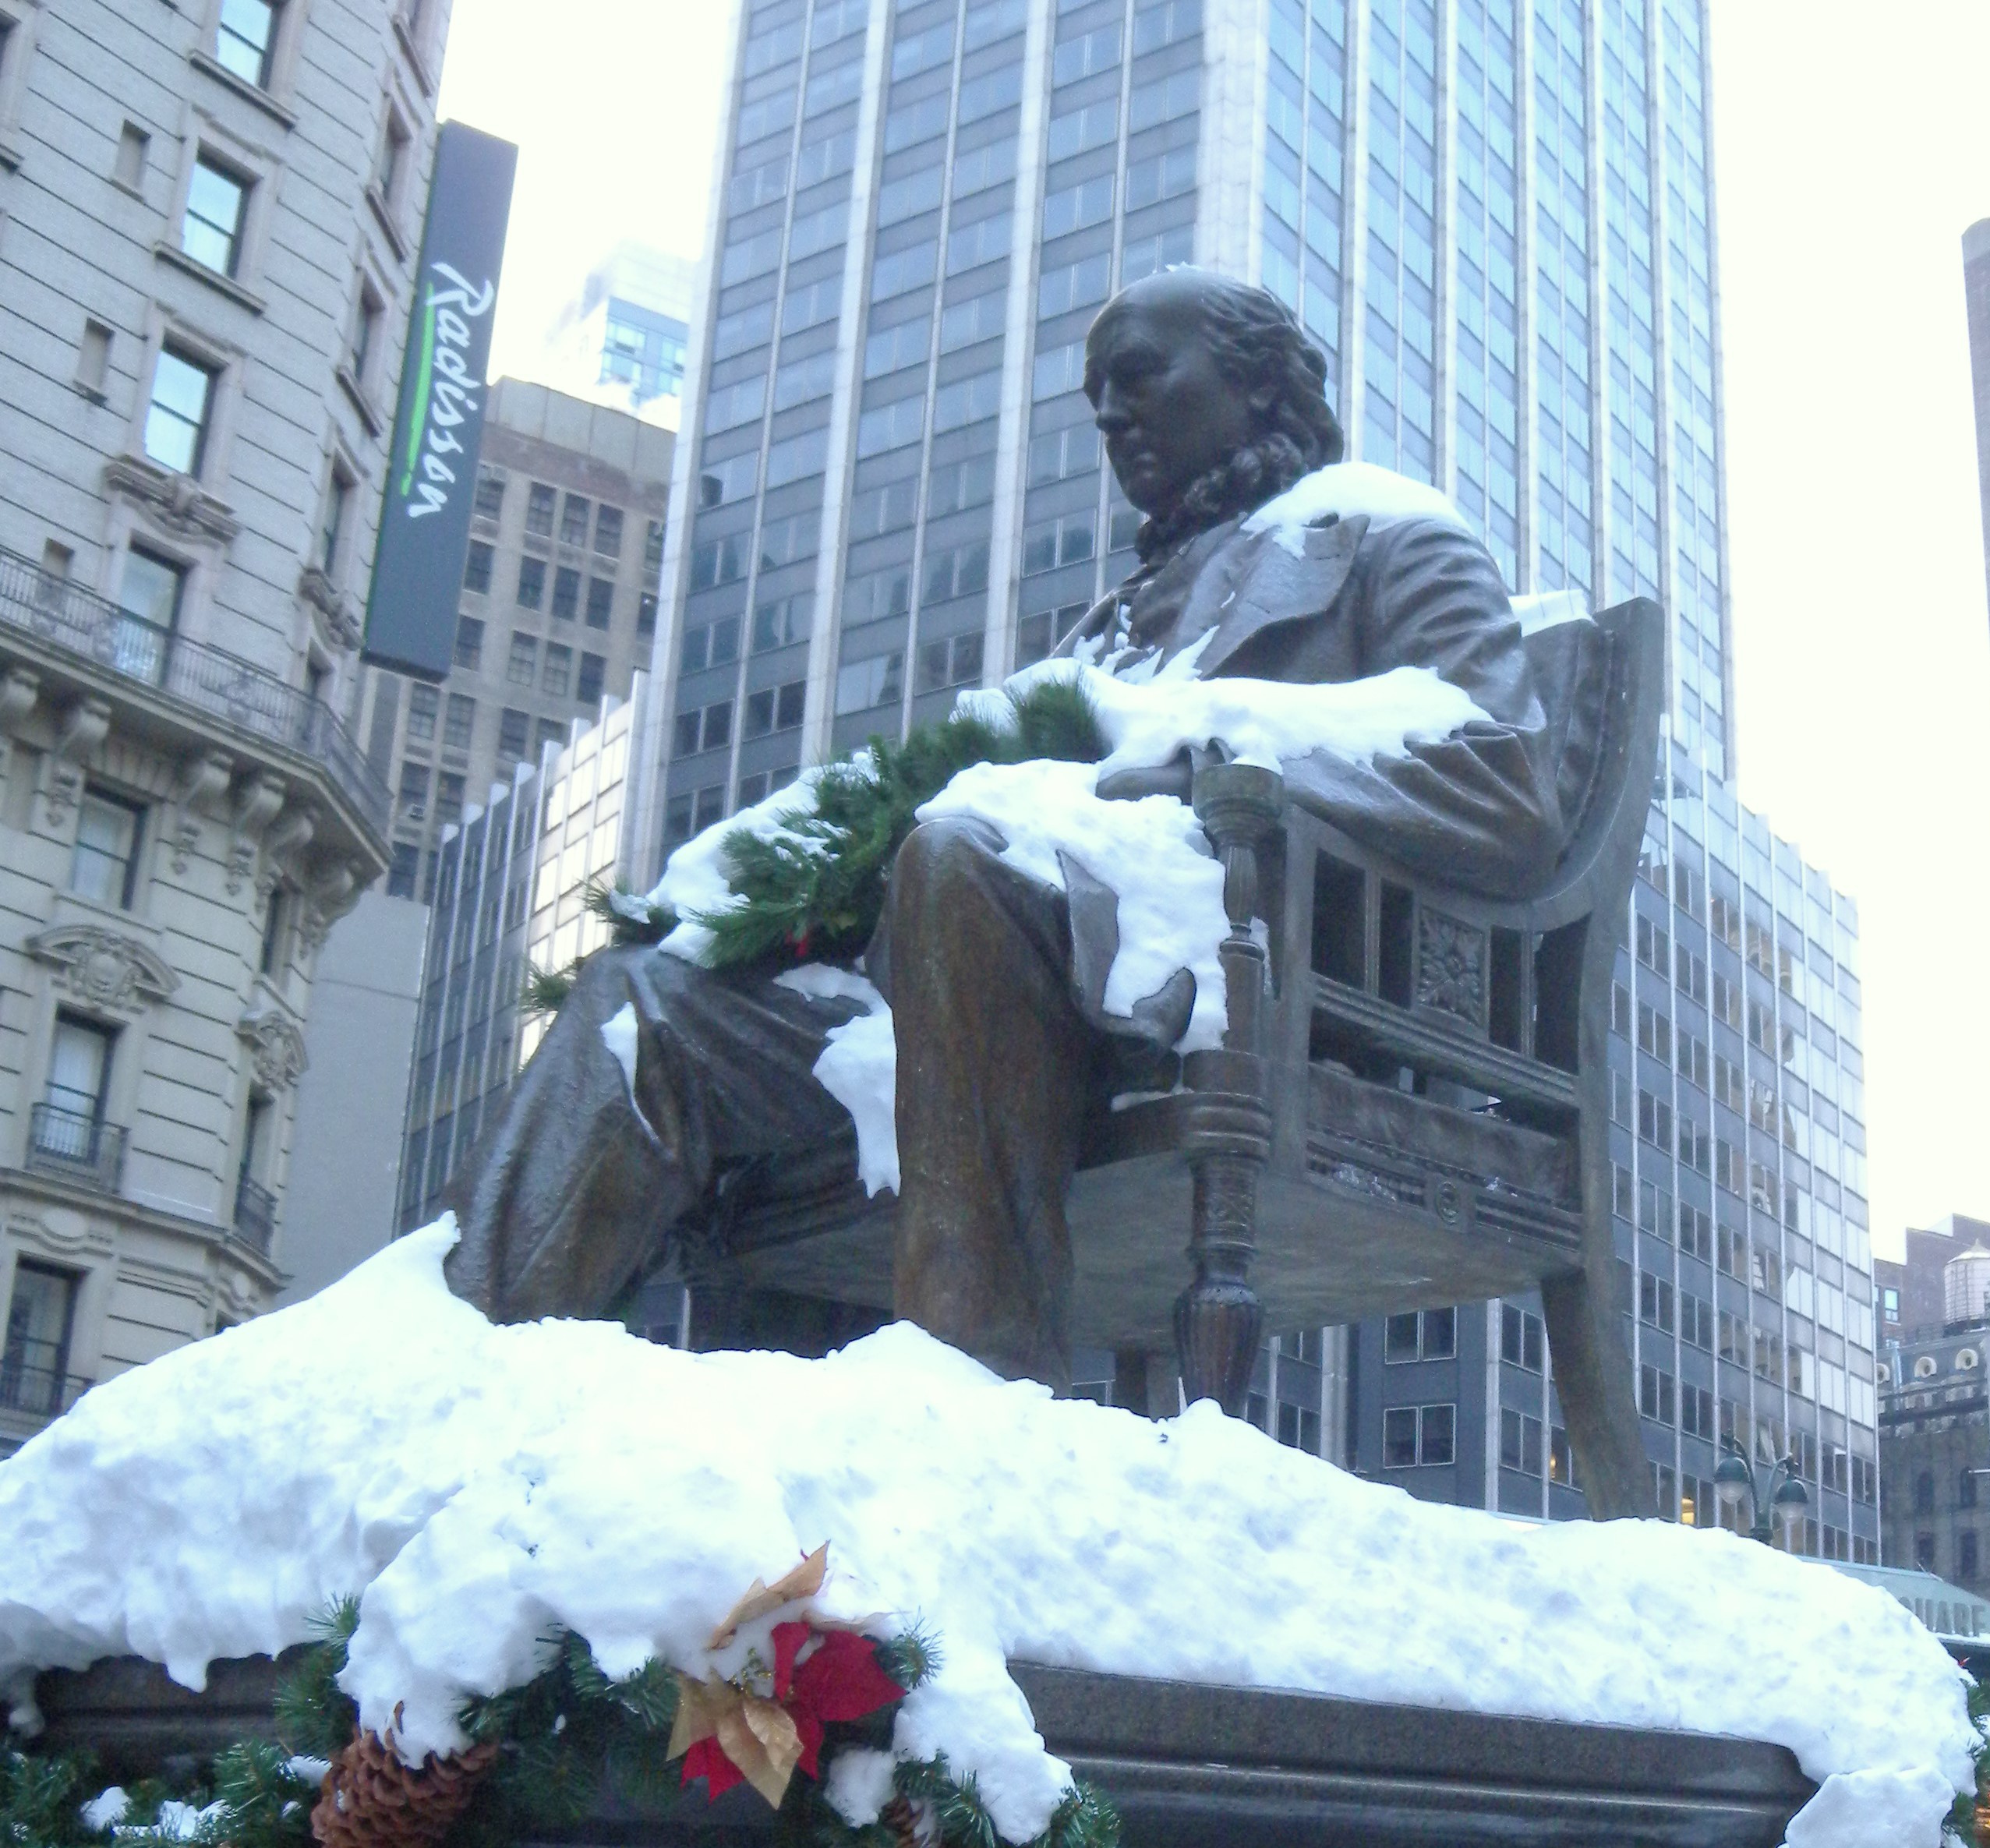 File:Statue Greeley Sq snow crop jeh.jpg - Wikimedia Commons